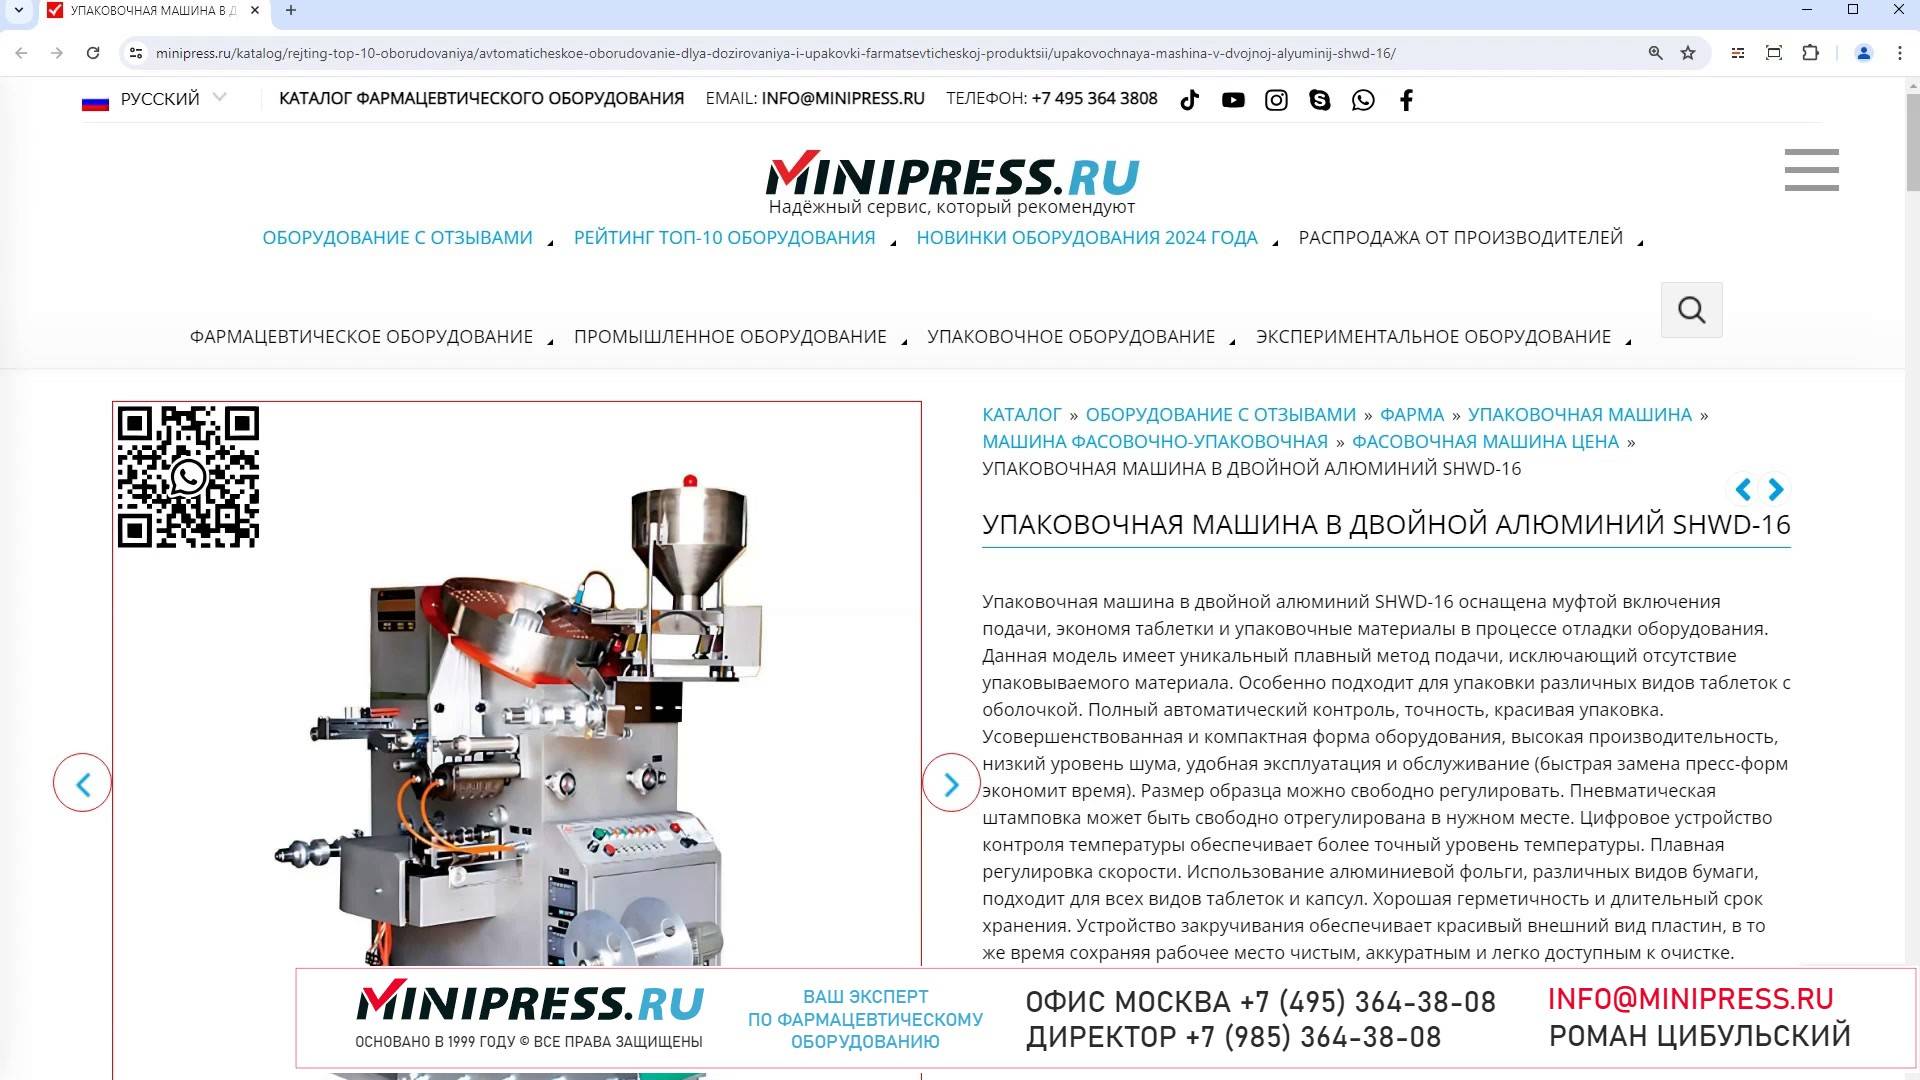 Minipress.ru Упаковочная машина в двойной алюминий SHWD-16